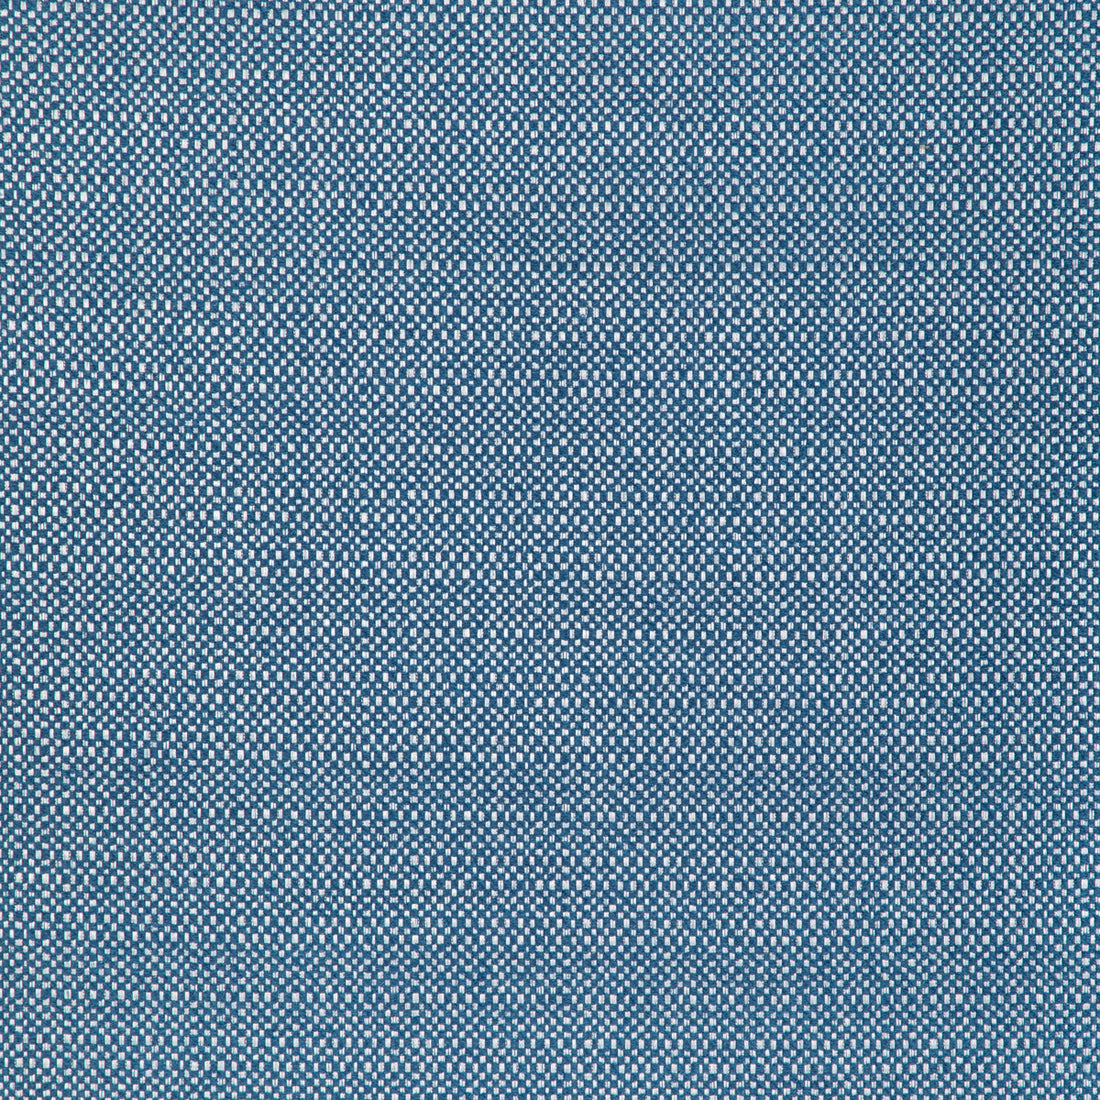 Kravet Design fabric in 36776-51 color - pattern 36776.51.0 - by Kravet Design in the Sea Island Indoor/Outdoor collection